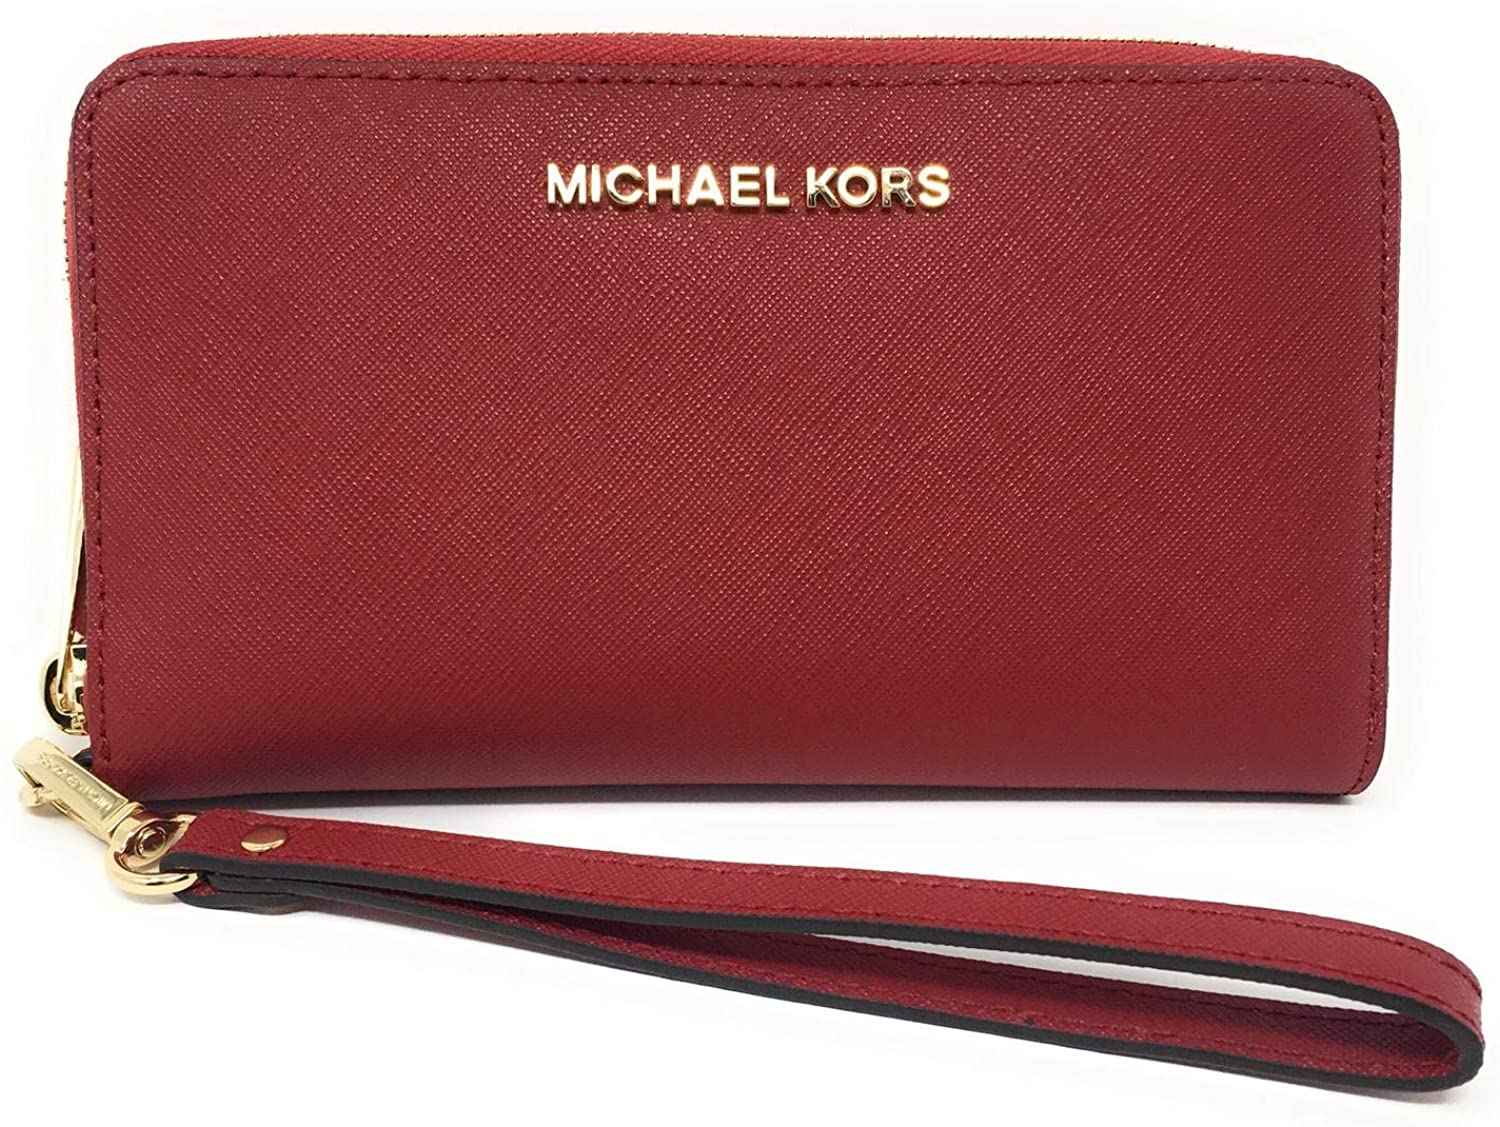 Michael Kors Women's Jet Set Wallet | eBay